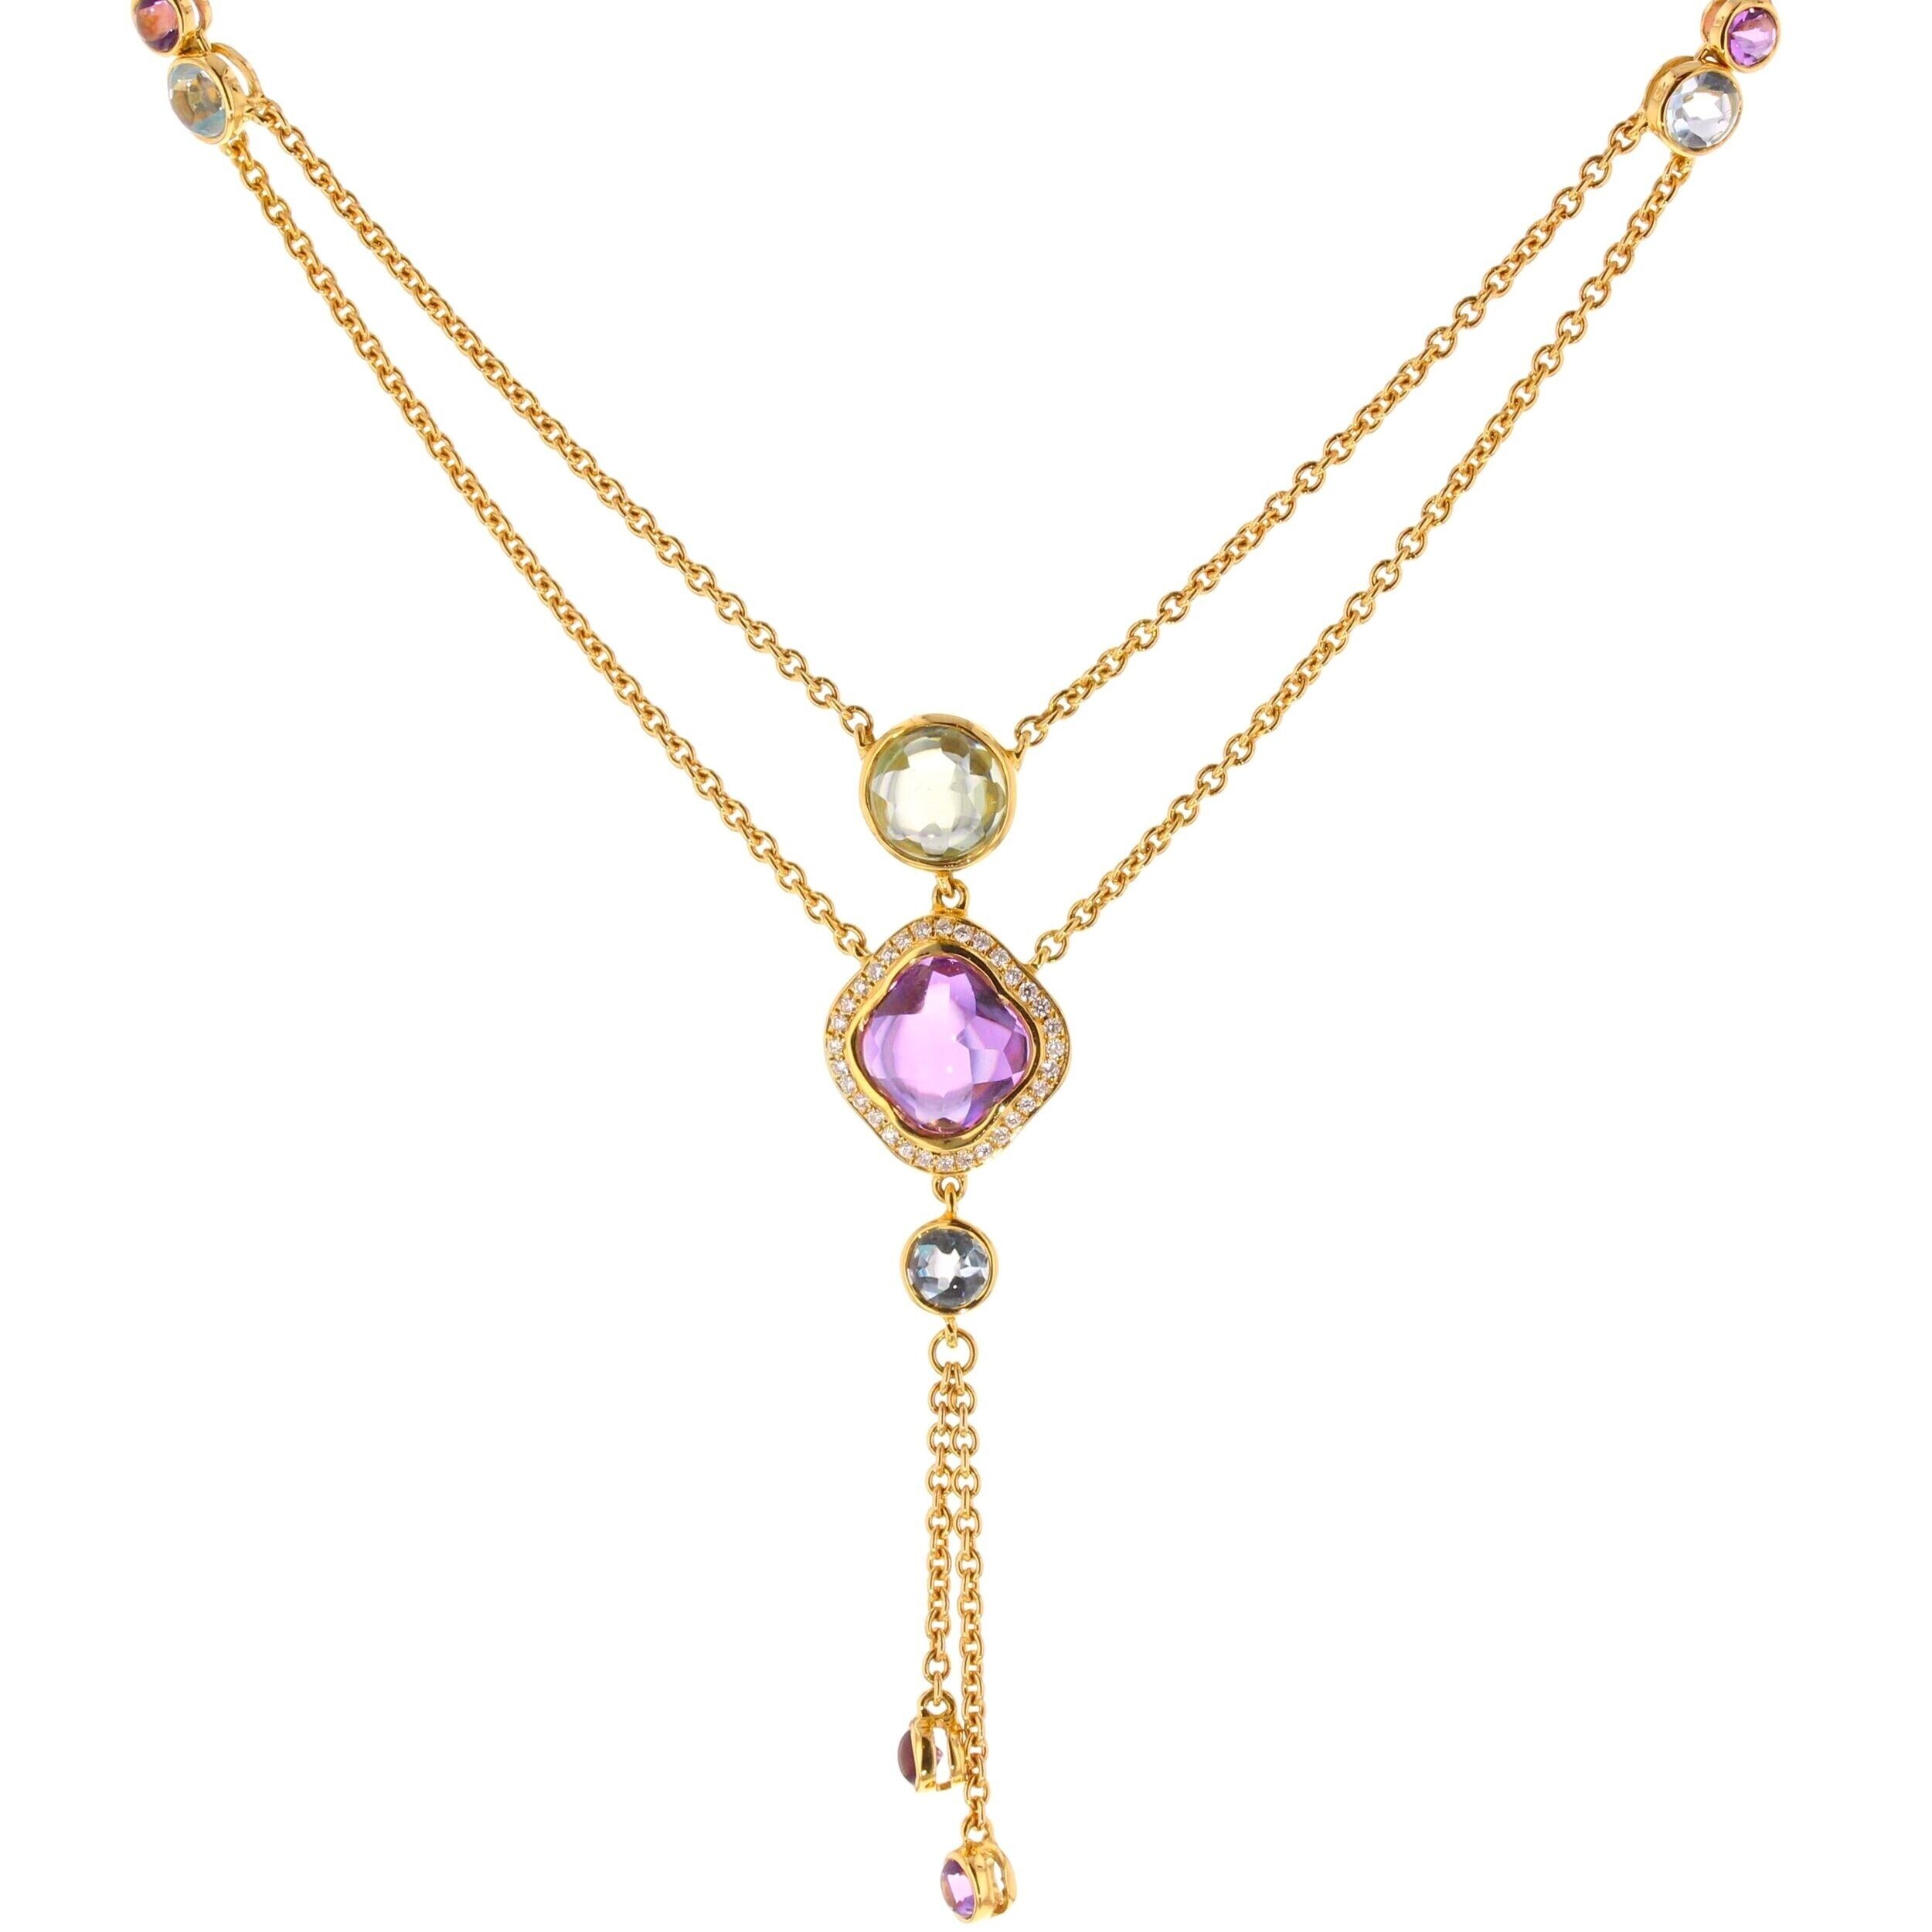 Vintage inspired Amethyst, Blue Topaz, &amp; Peridot 18K gold drop necklace. $3395 